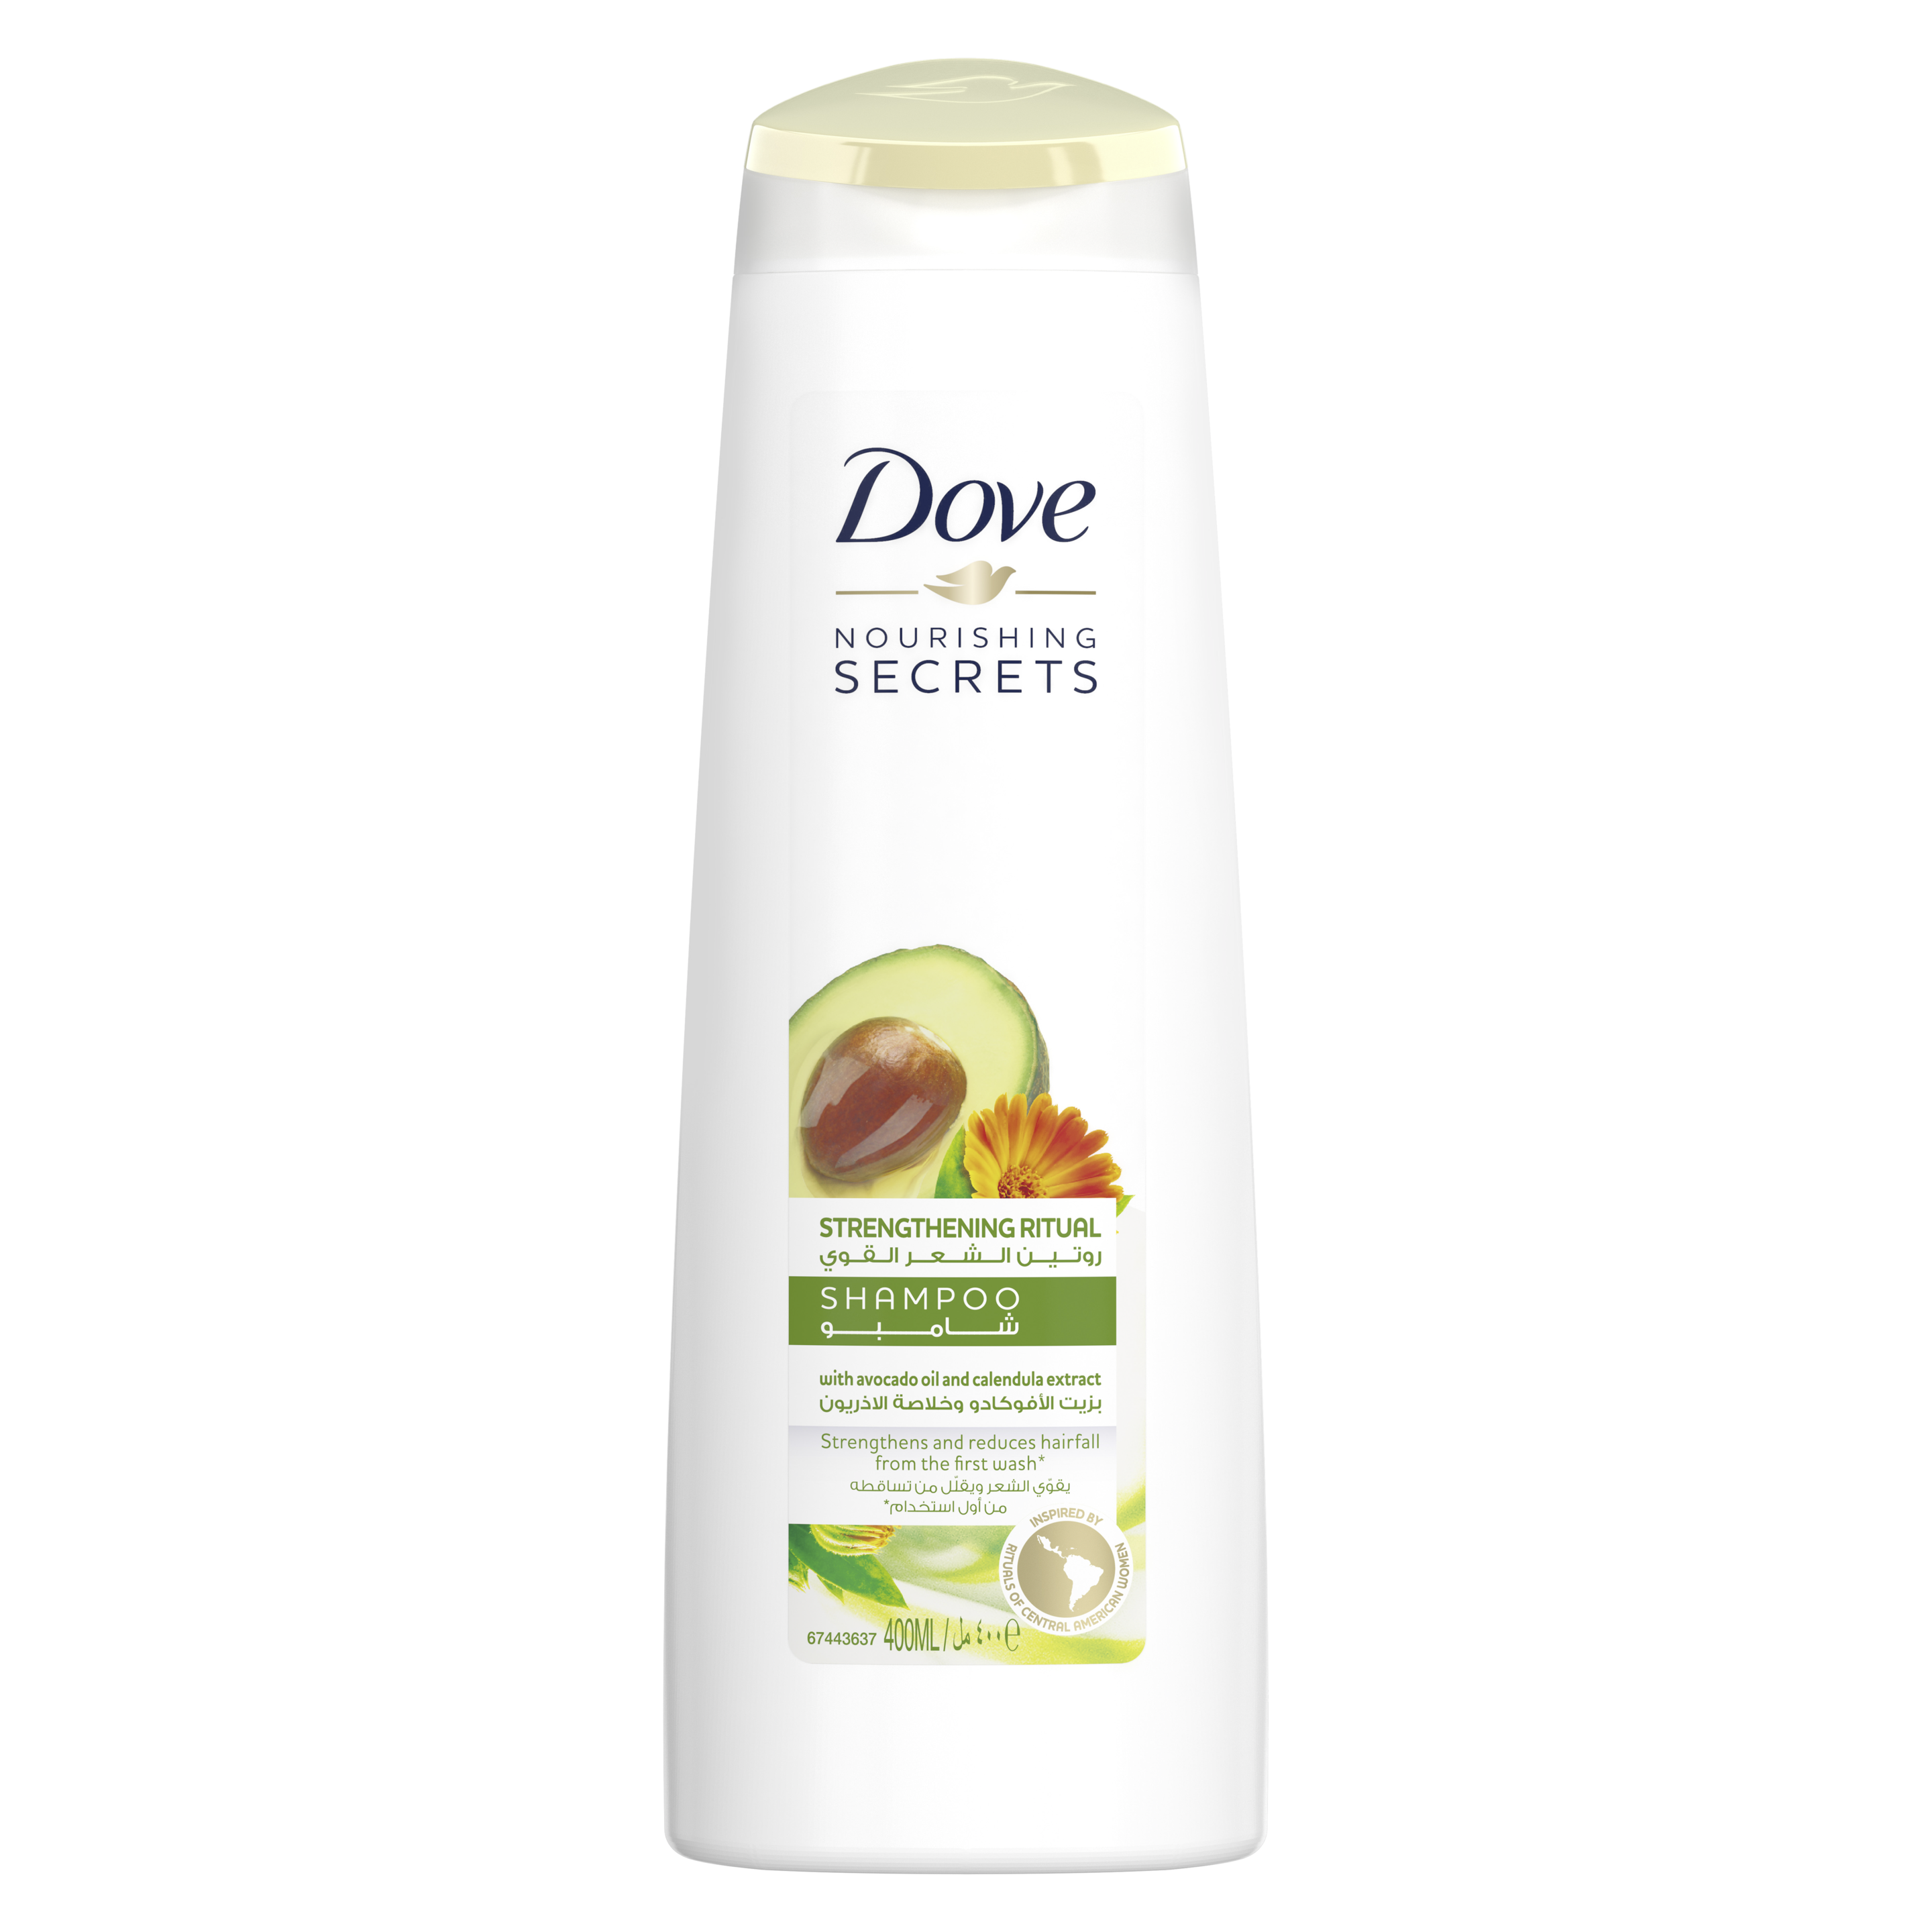 Dove Nourishing Secrets Shampoo Strengthening Ritual - Avocado Oil and Calendula Extract 400ml